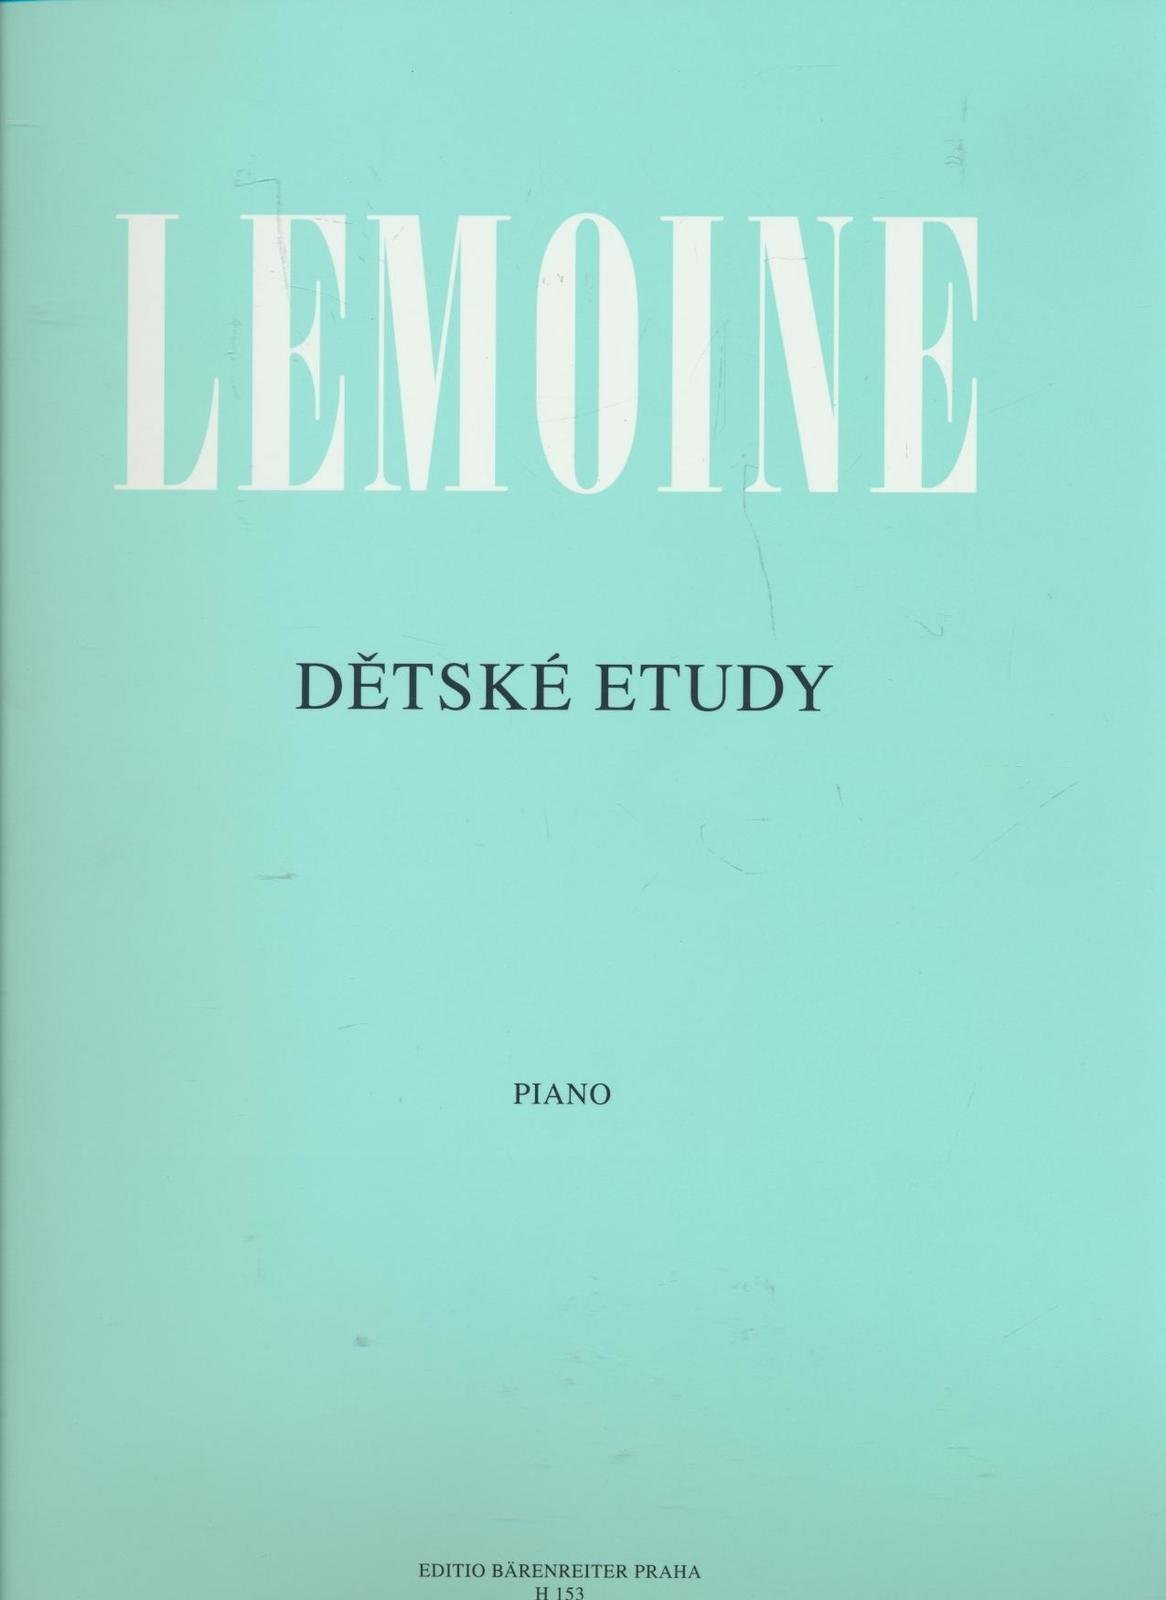 Noten für Tasteninstrumente Henri Lemoine Detské etudy op. 37